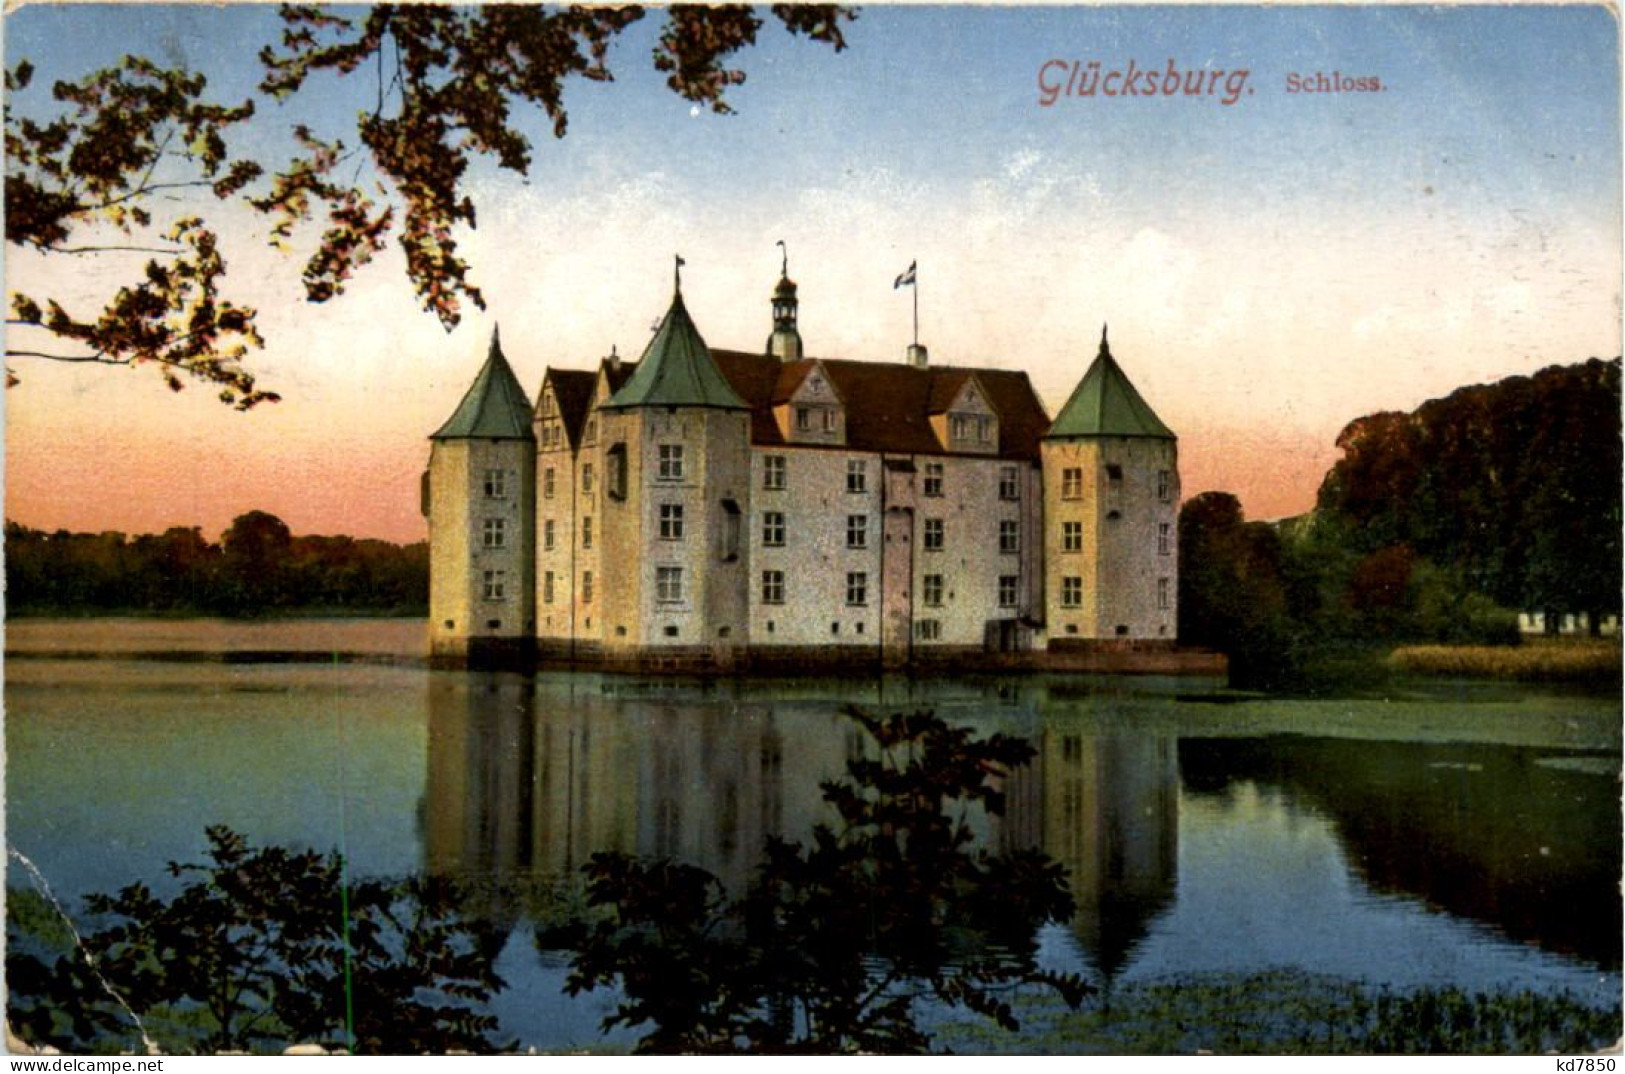 Glücksburg, Schloss - Gluecksburg